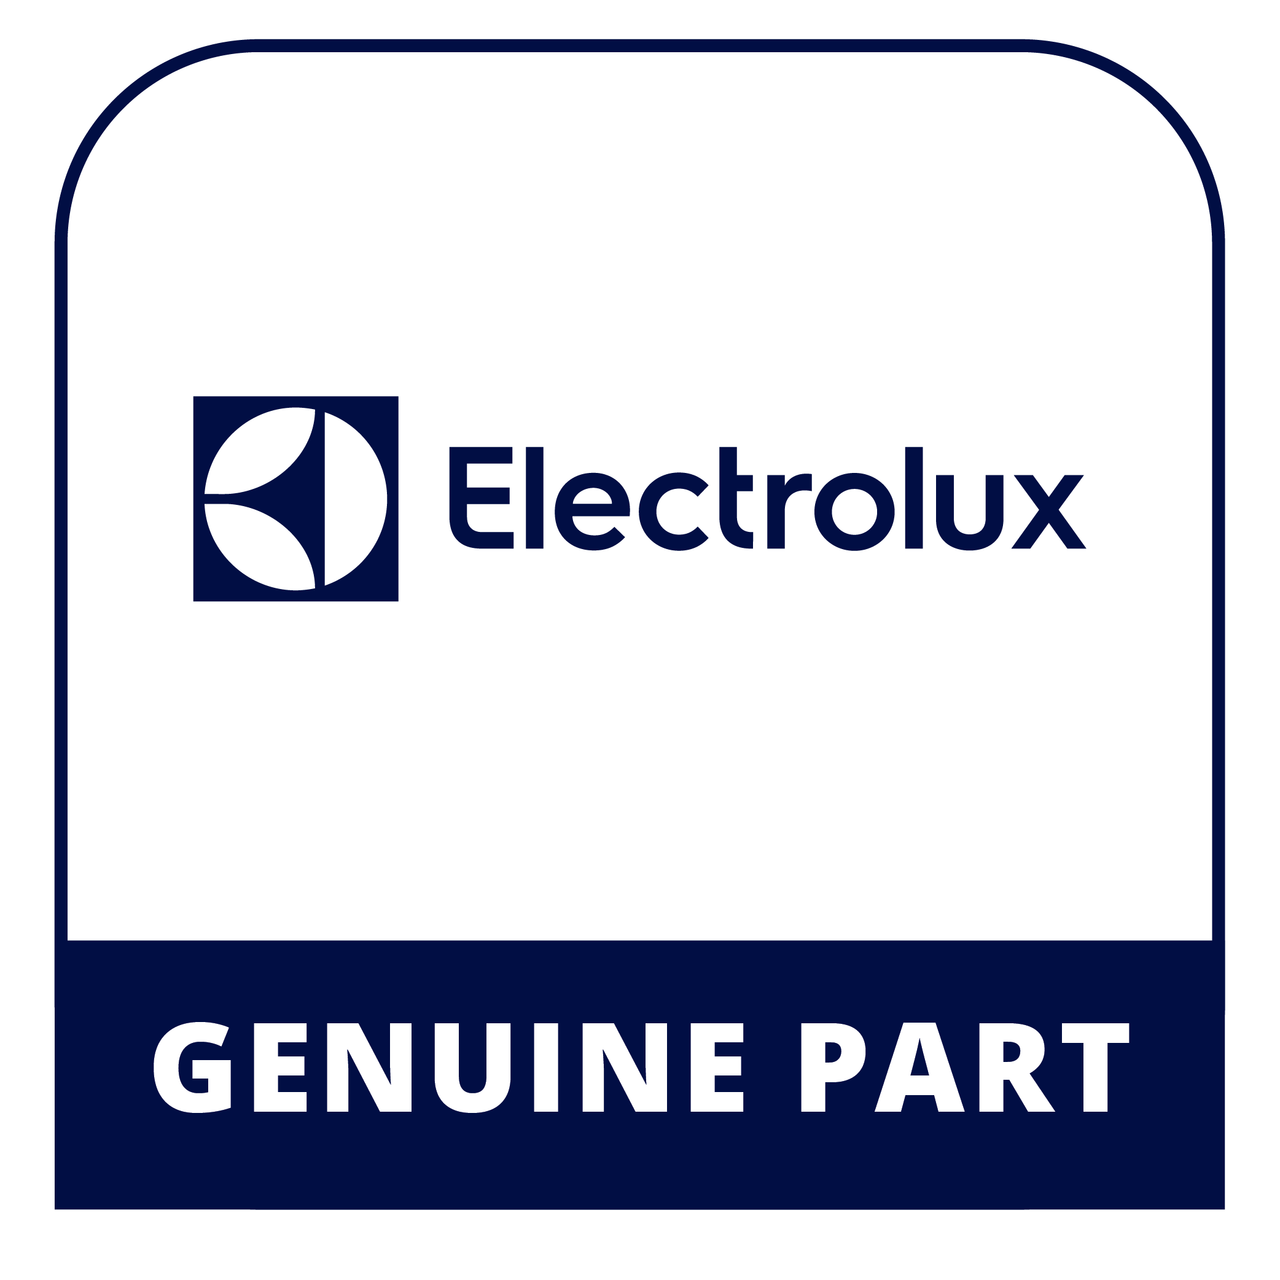 Frigidaire - Electrolux 5304523531 End Cover - Genuine Electrolux Part